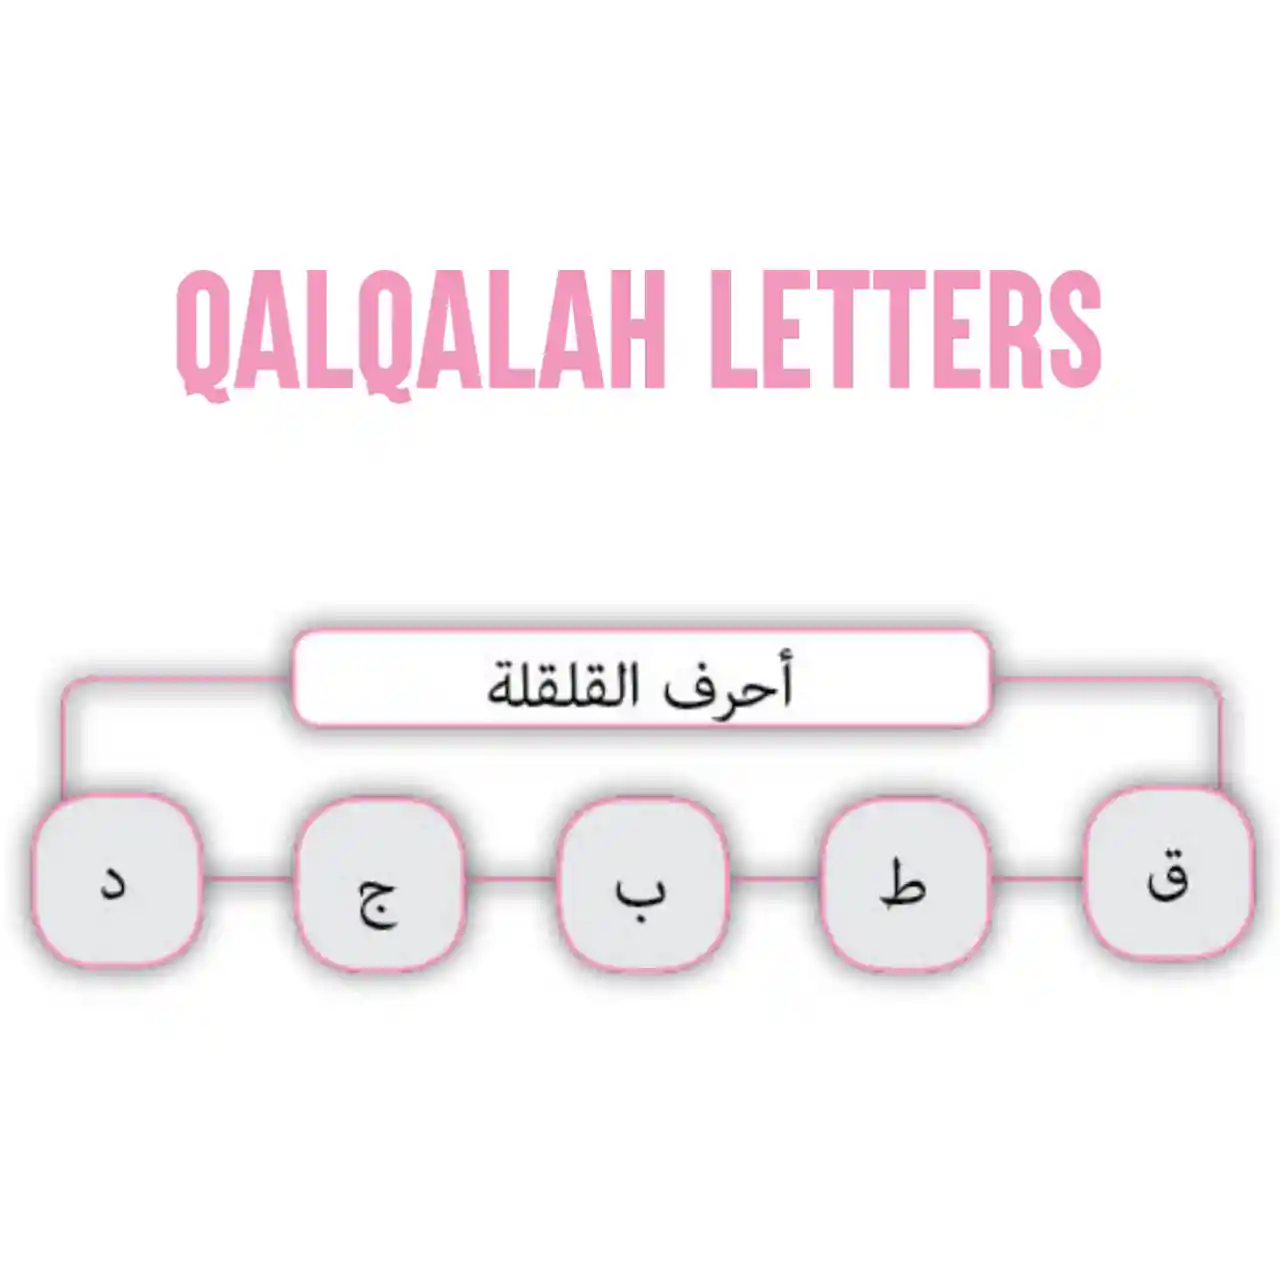 Qalqalah Letters